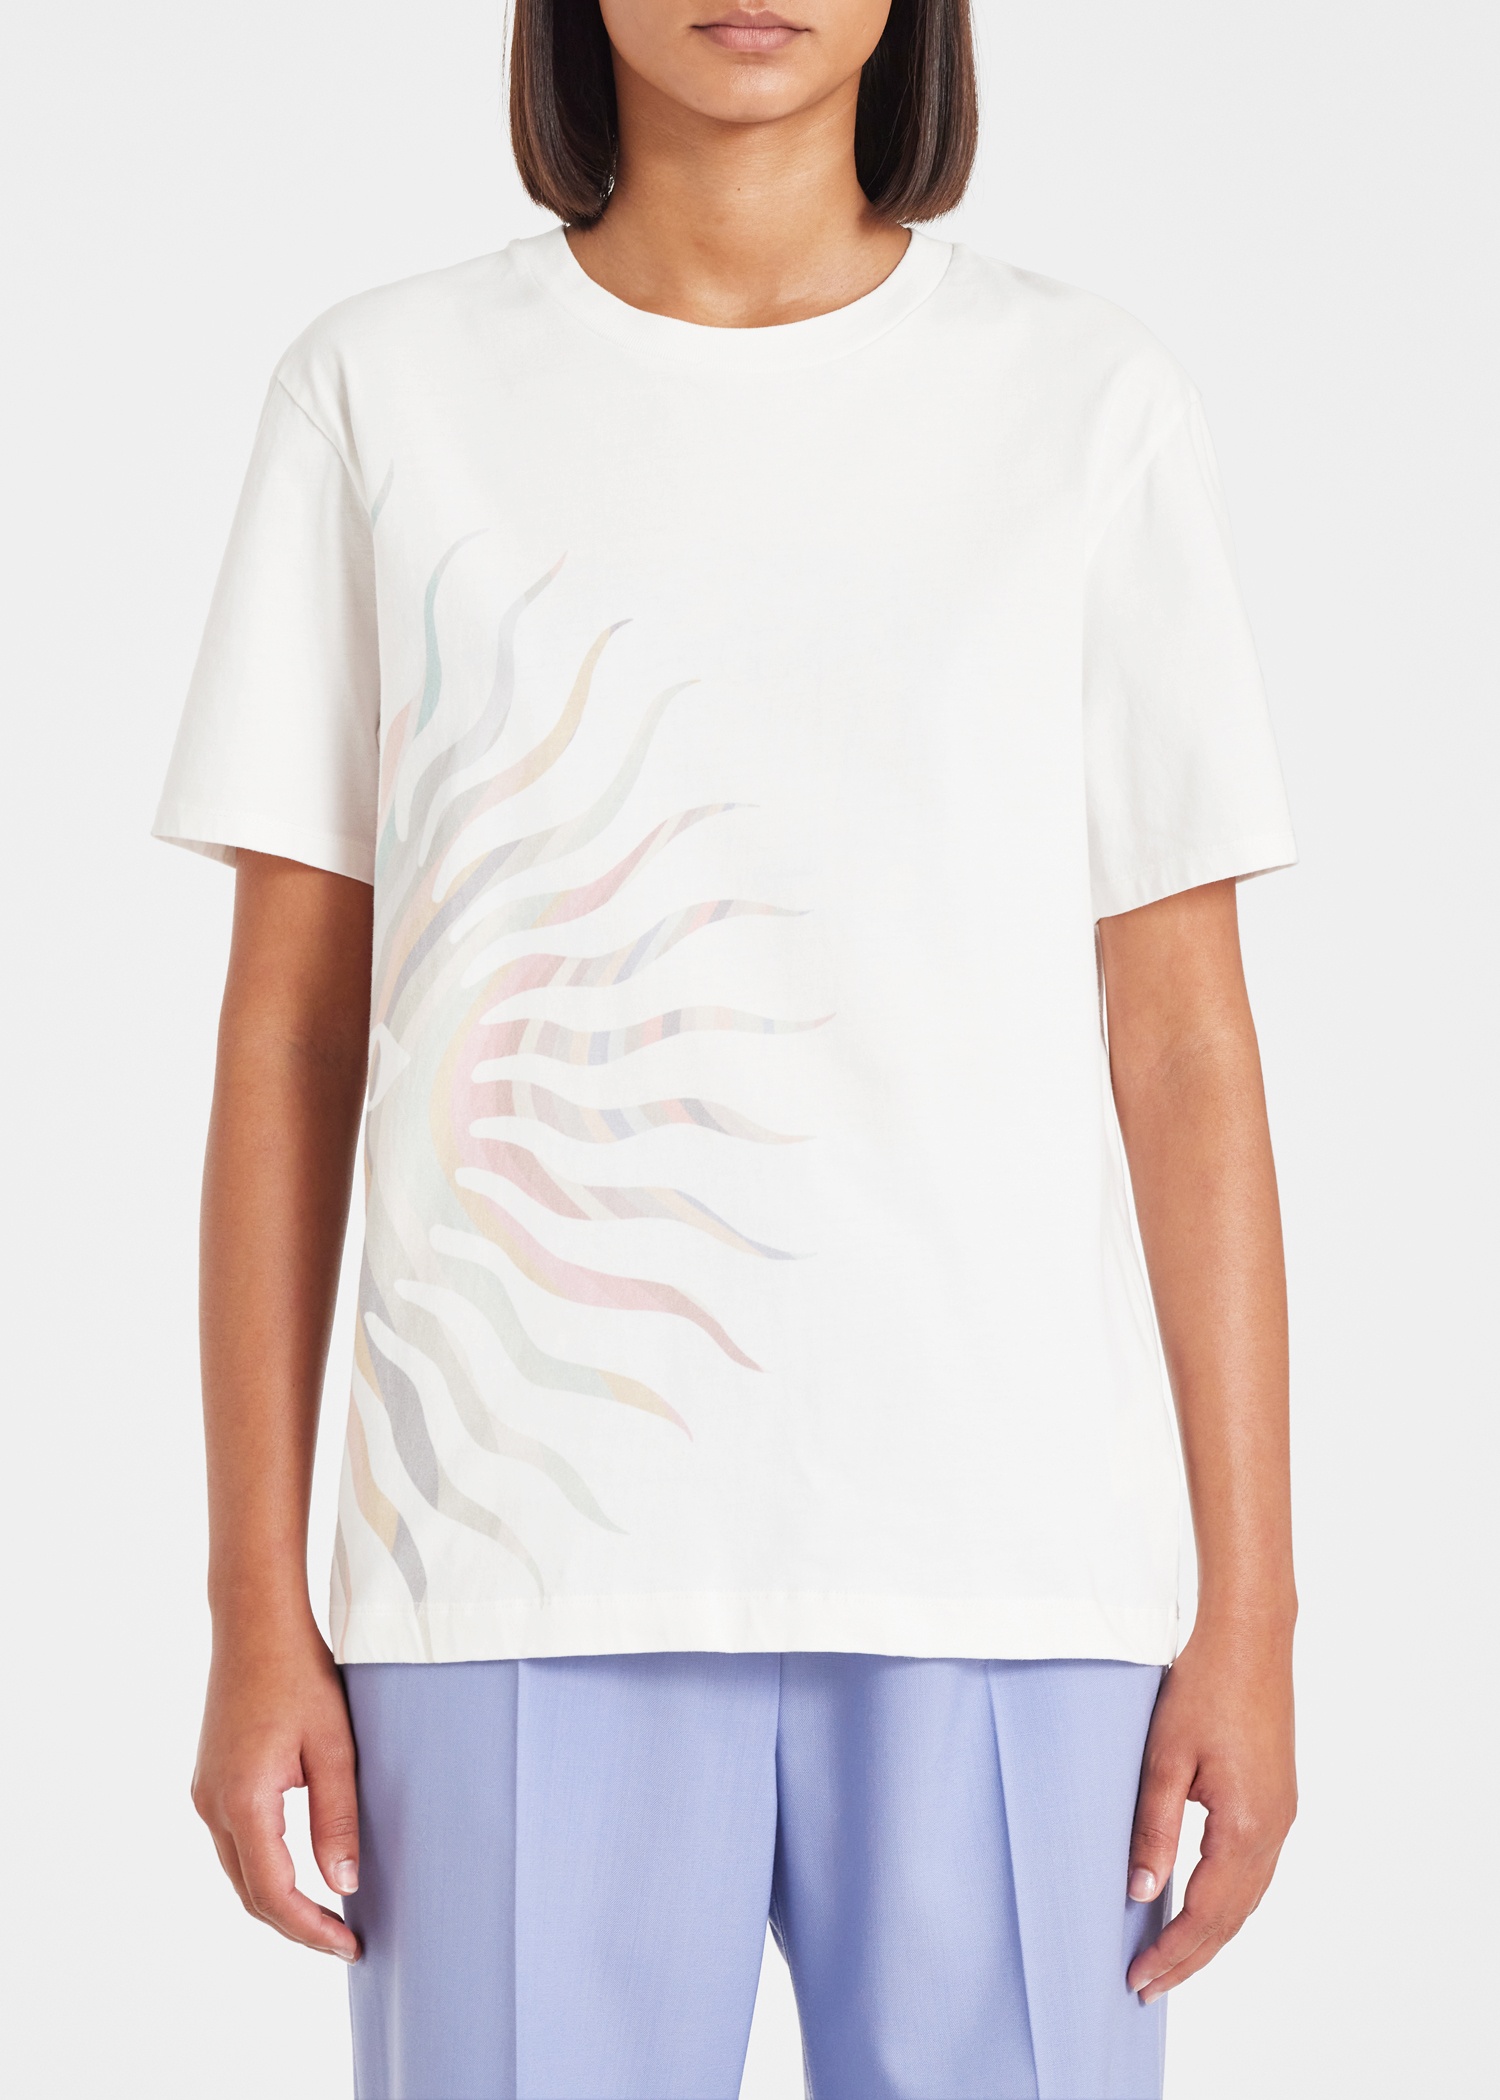 Women's 'Swirl Sun' T-Shirt - 4